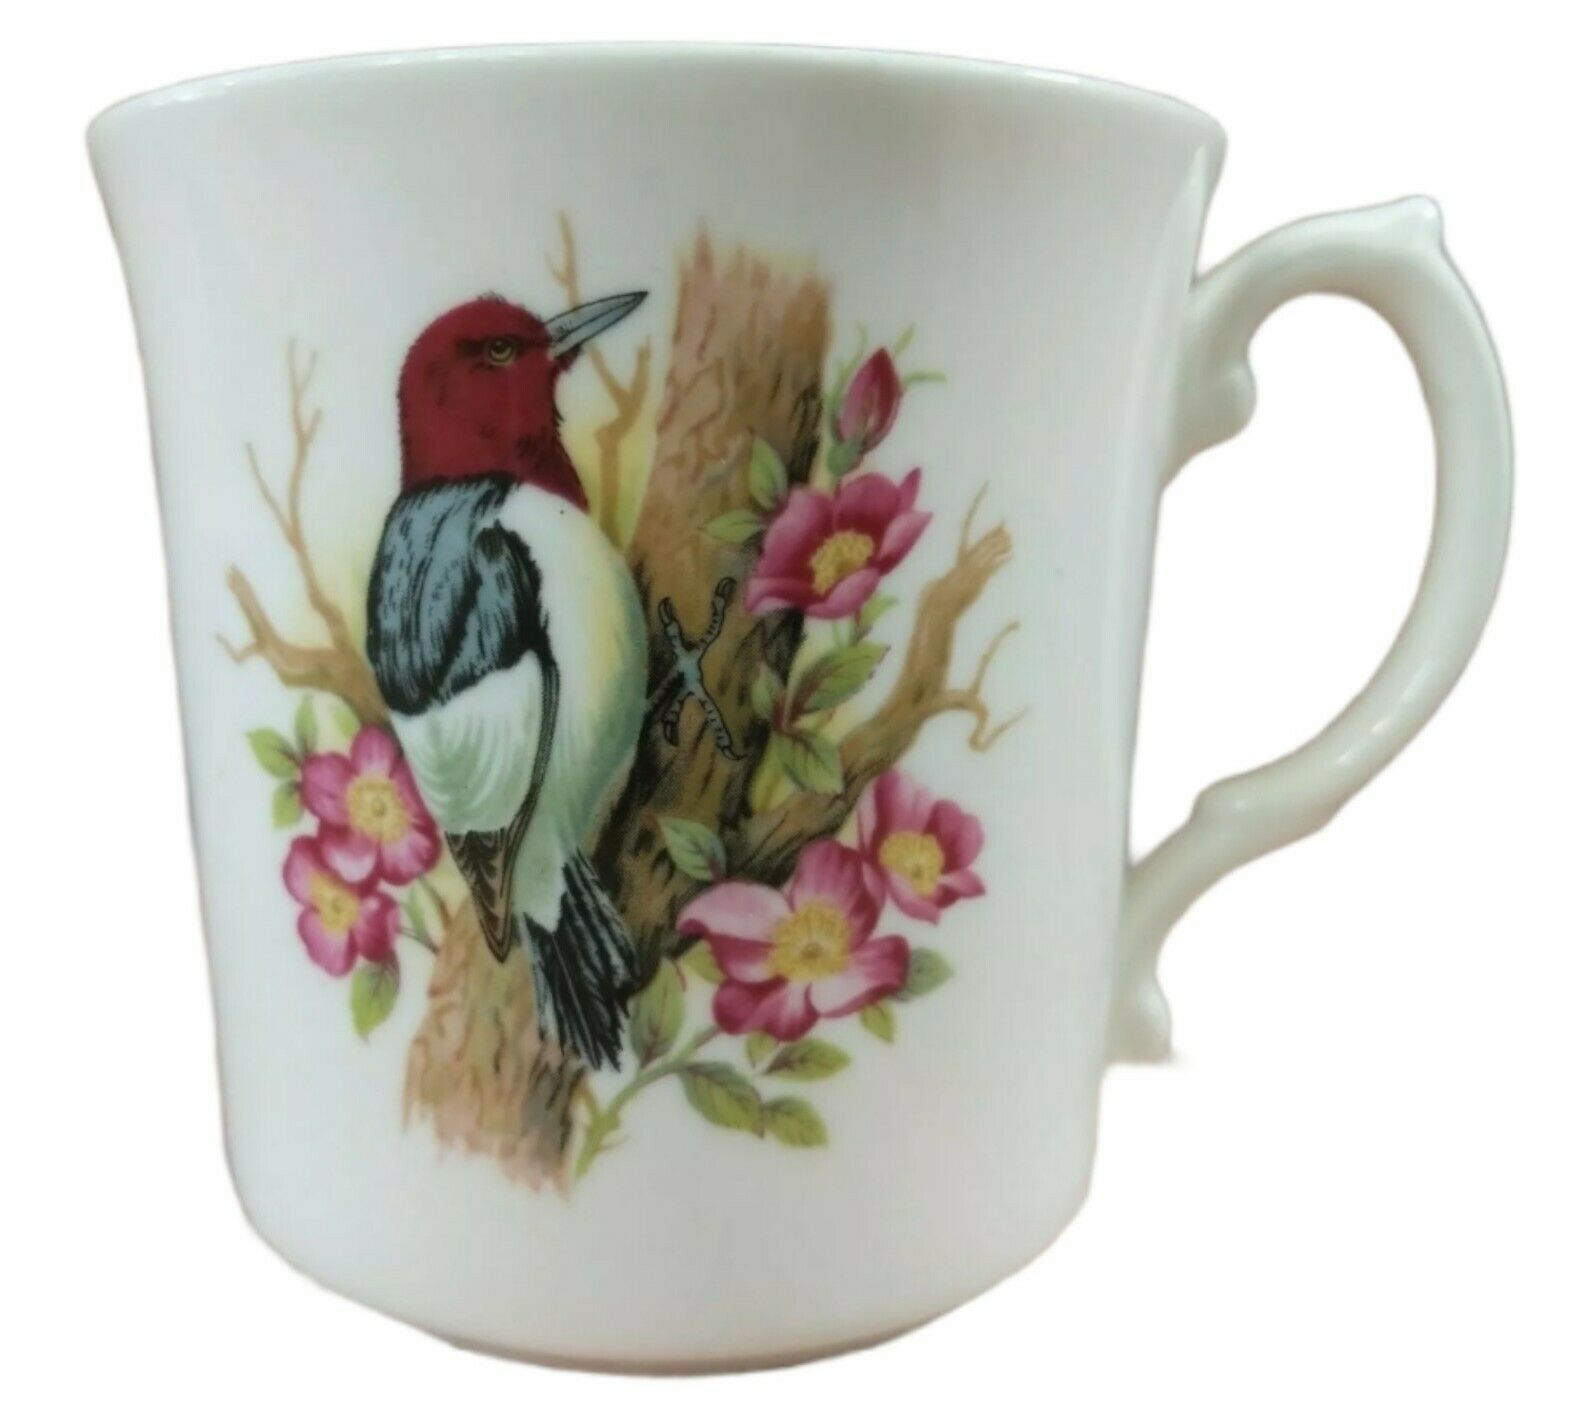 Marlborough Bone China Cup Mug Red Headed Woodpecker Bird White Pink Flowers